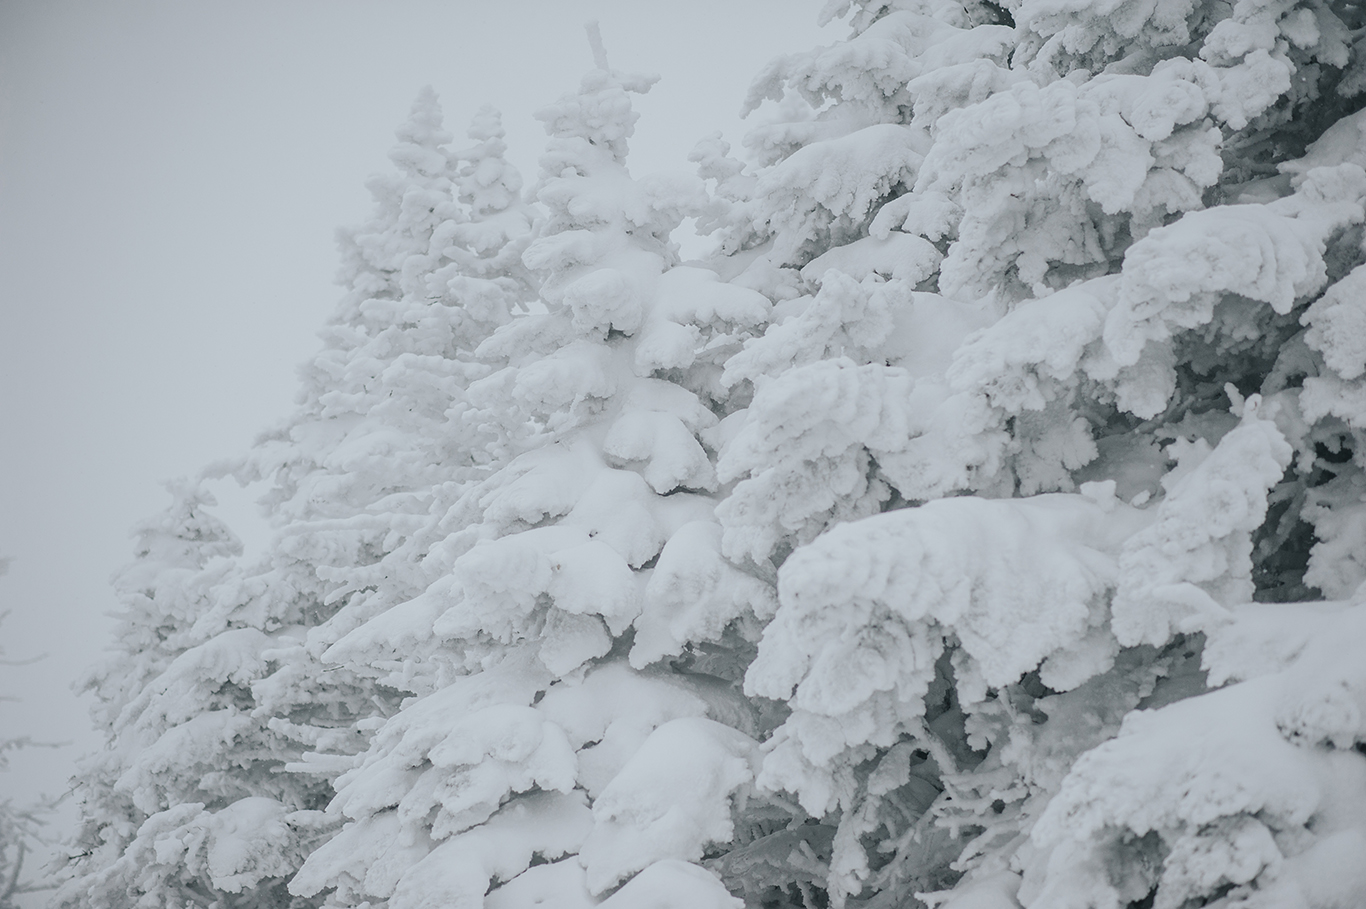 snow-covered-trees-vermont-winter-killington-peak-idena-photographer.jpg